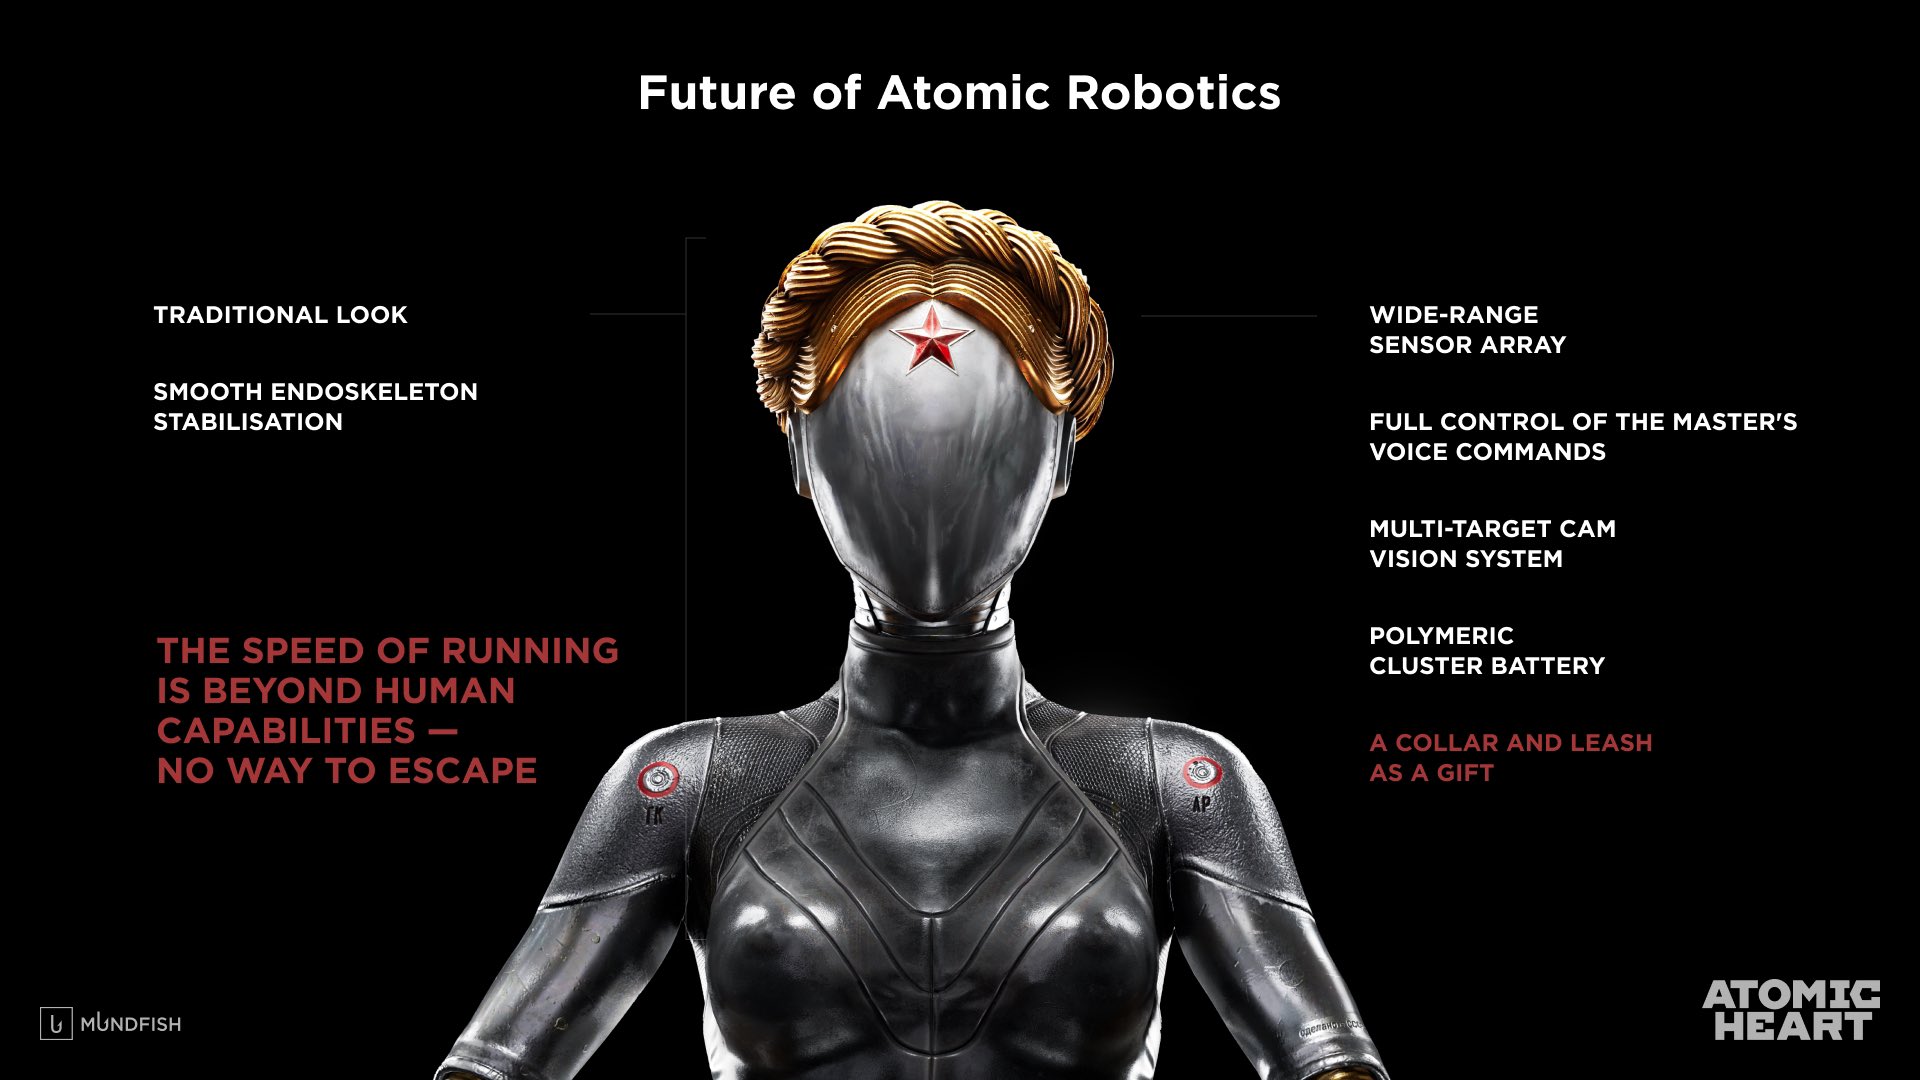 Robert Bagratuni on X: @elonmusk , I am the founder of Atomic